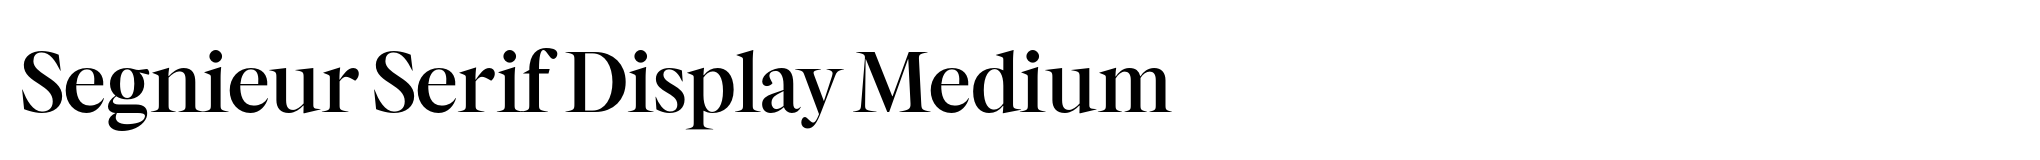 Segnieur Serif Display Medium image